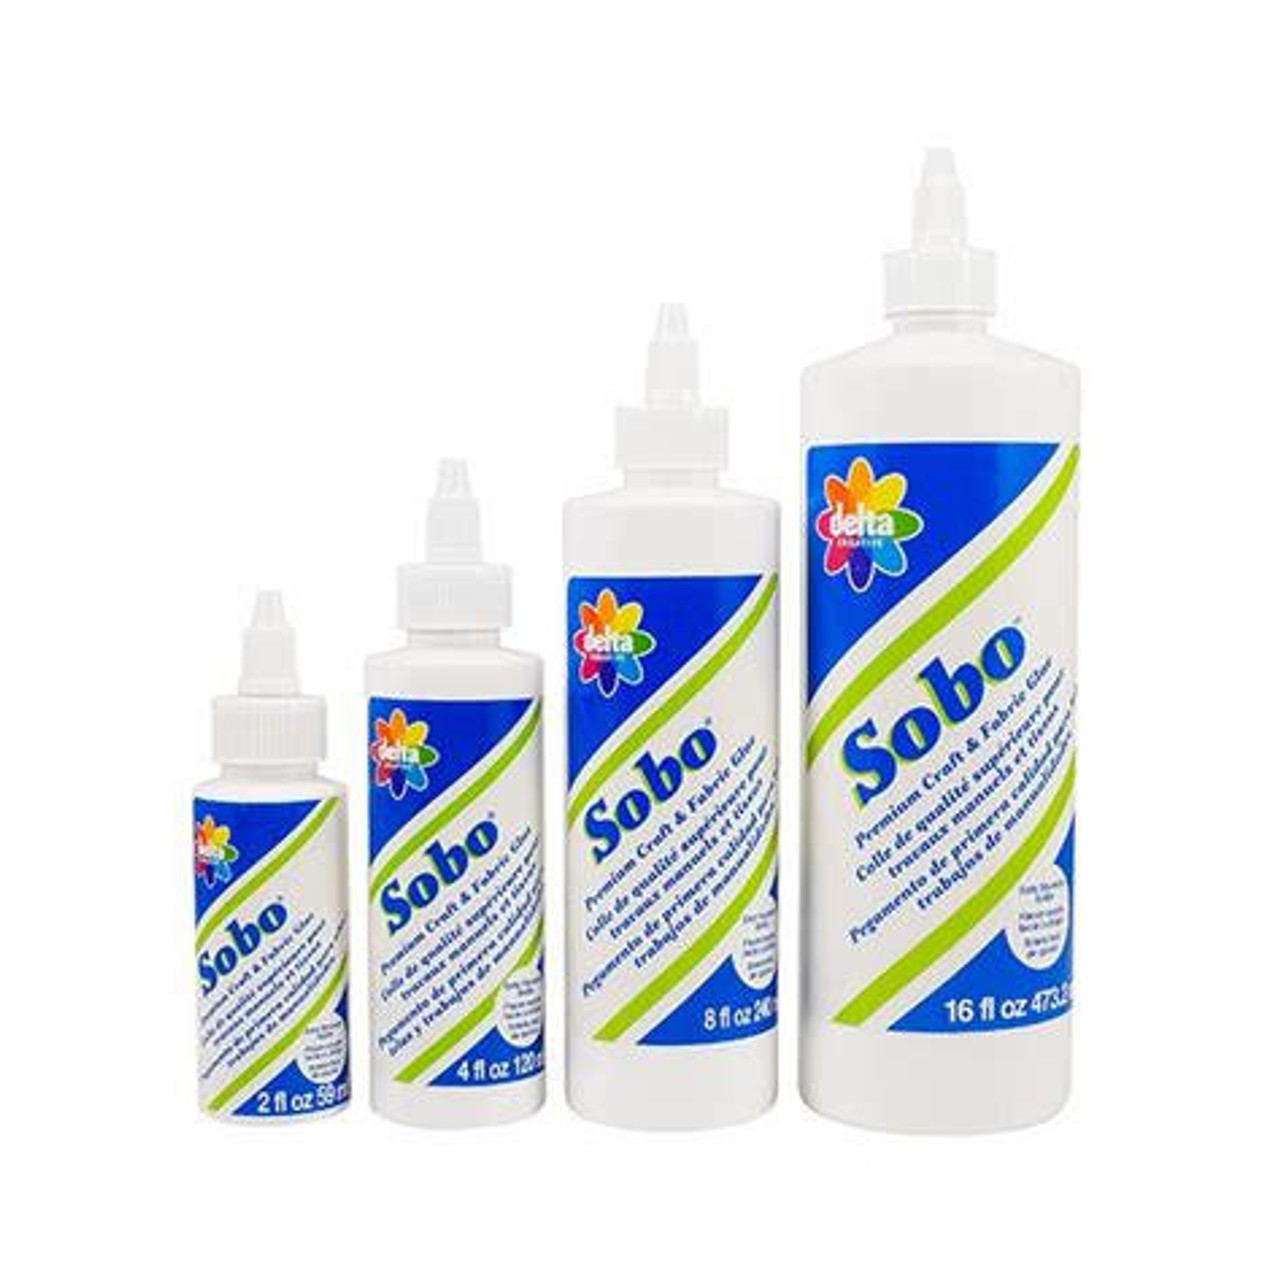 Sobo Premium Craft & Fabric Glue, 2oz - Sam Flax Atlanta